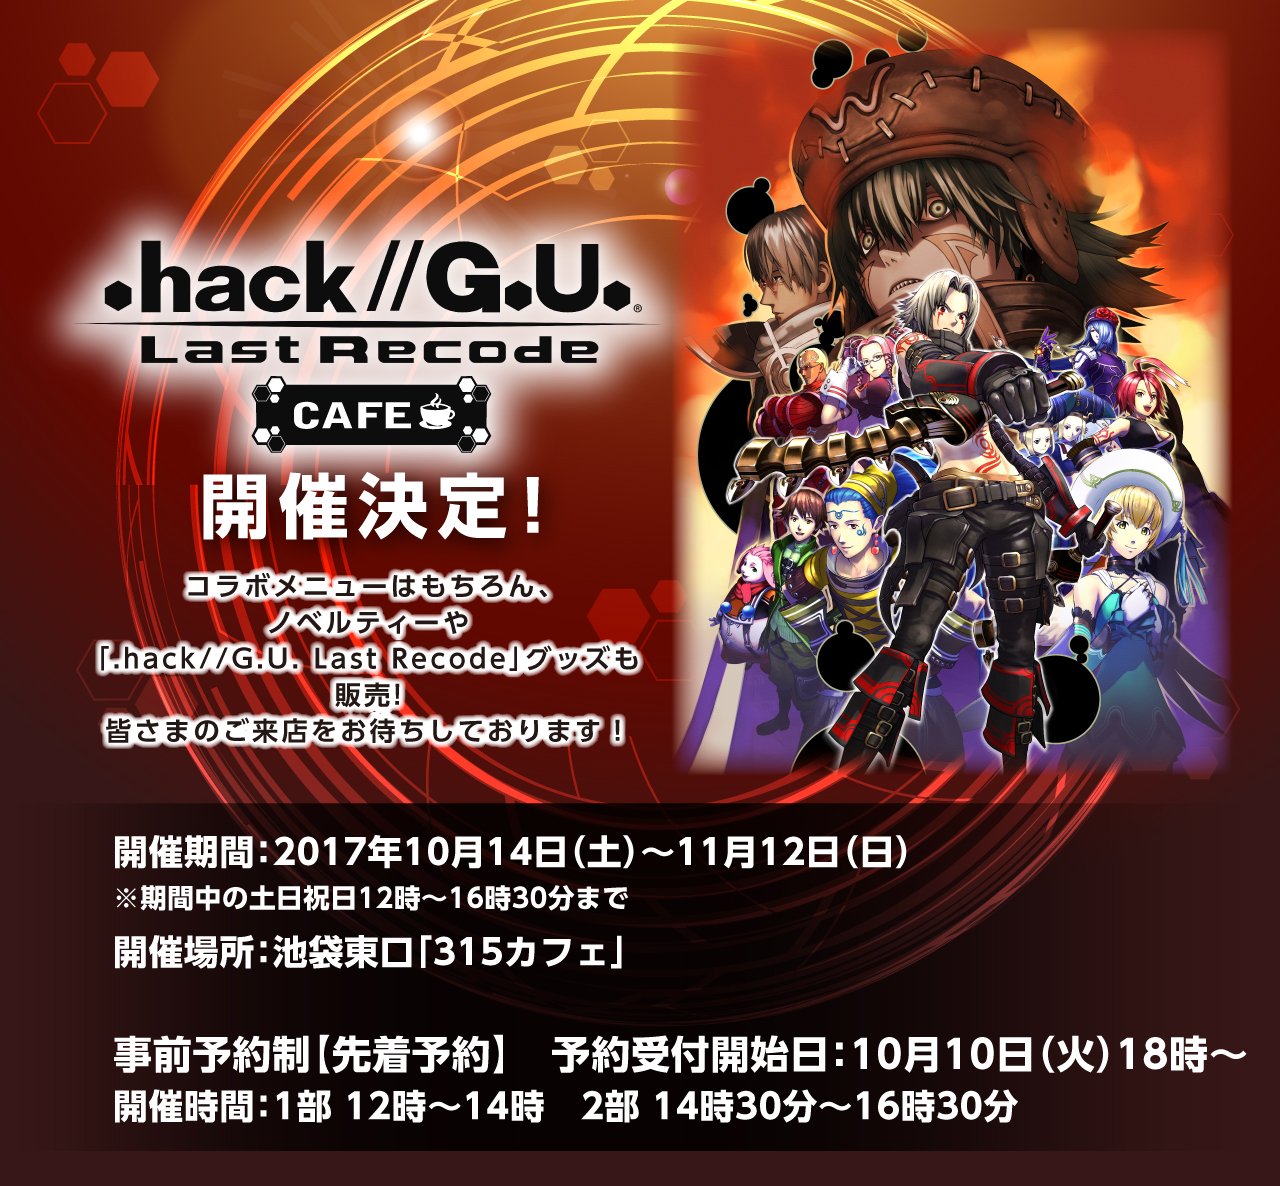 .hack//G.U. Last Recode Cafe